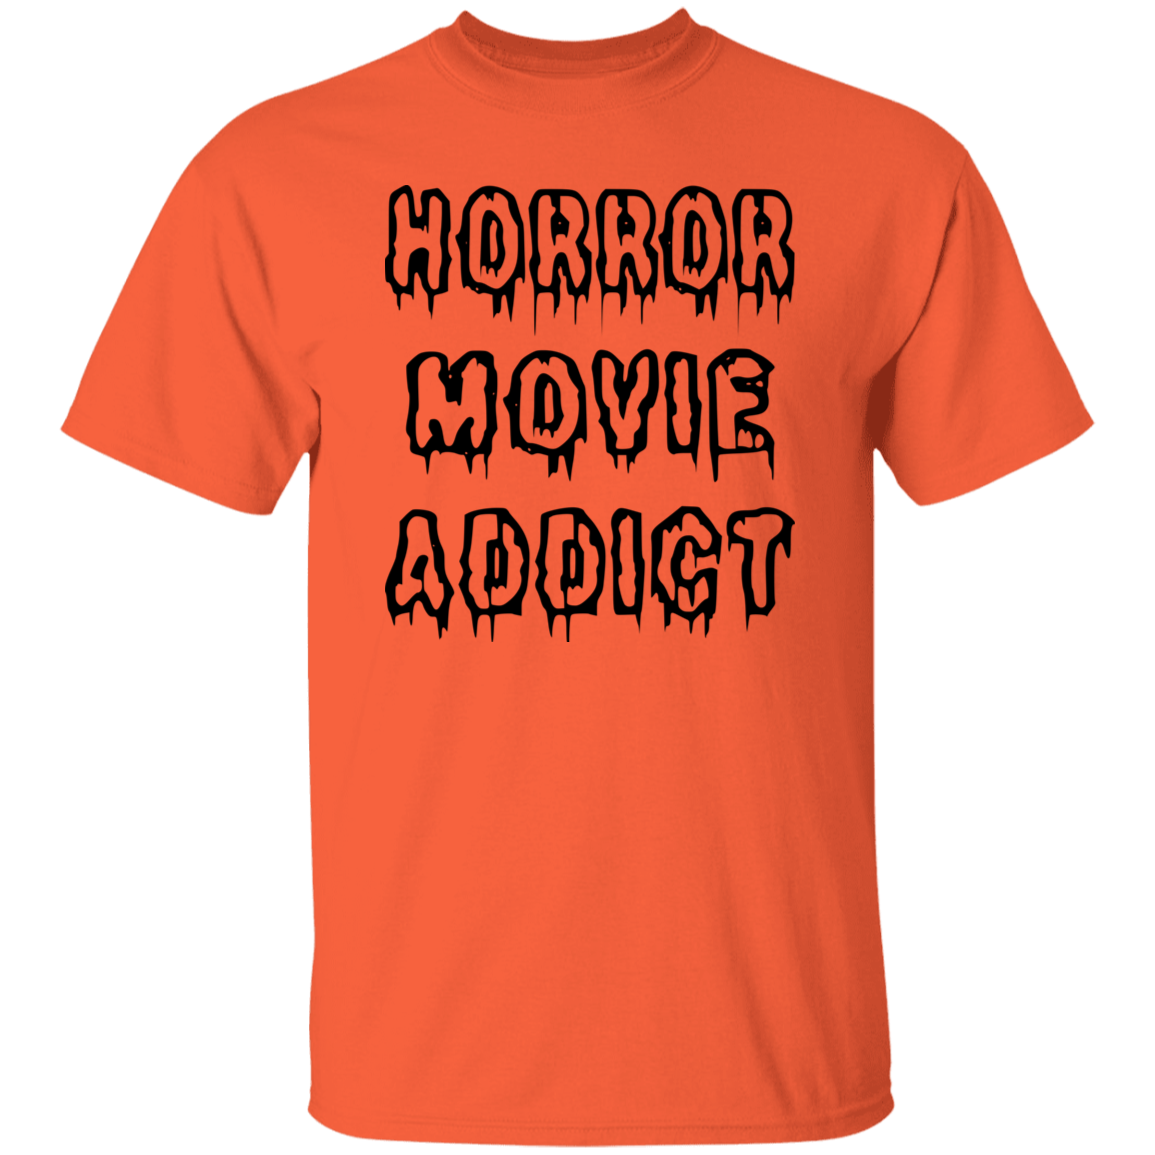 Horror 5.3 oz. T-Shirt